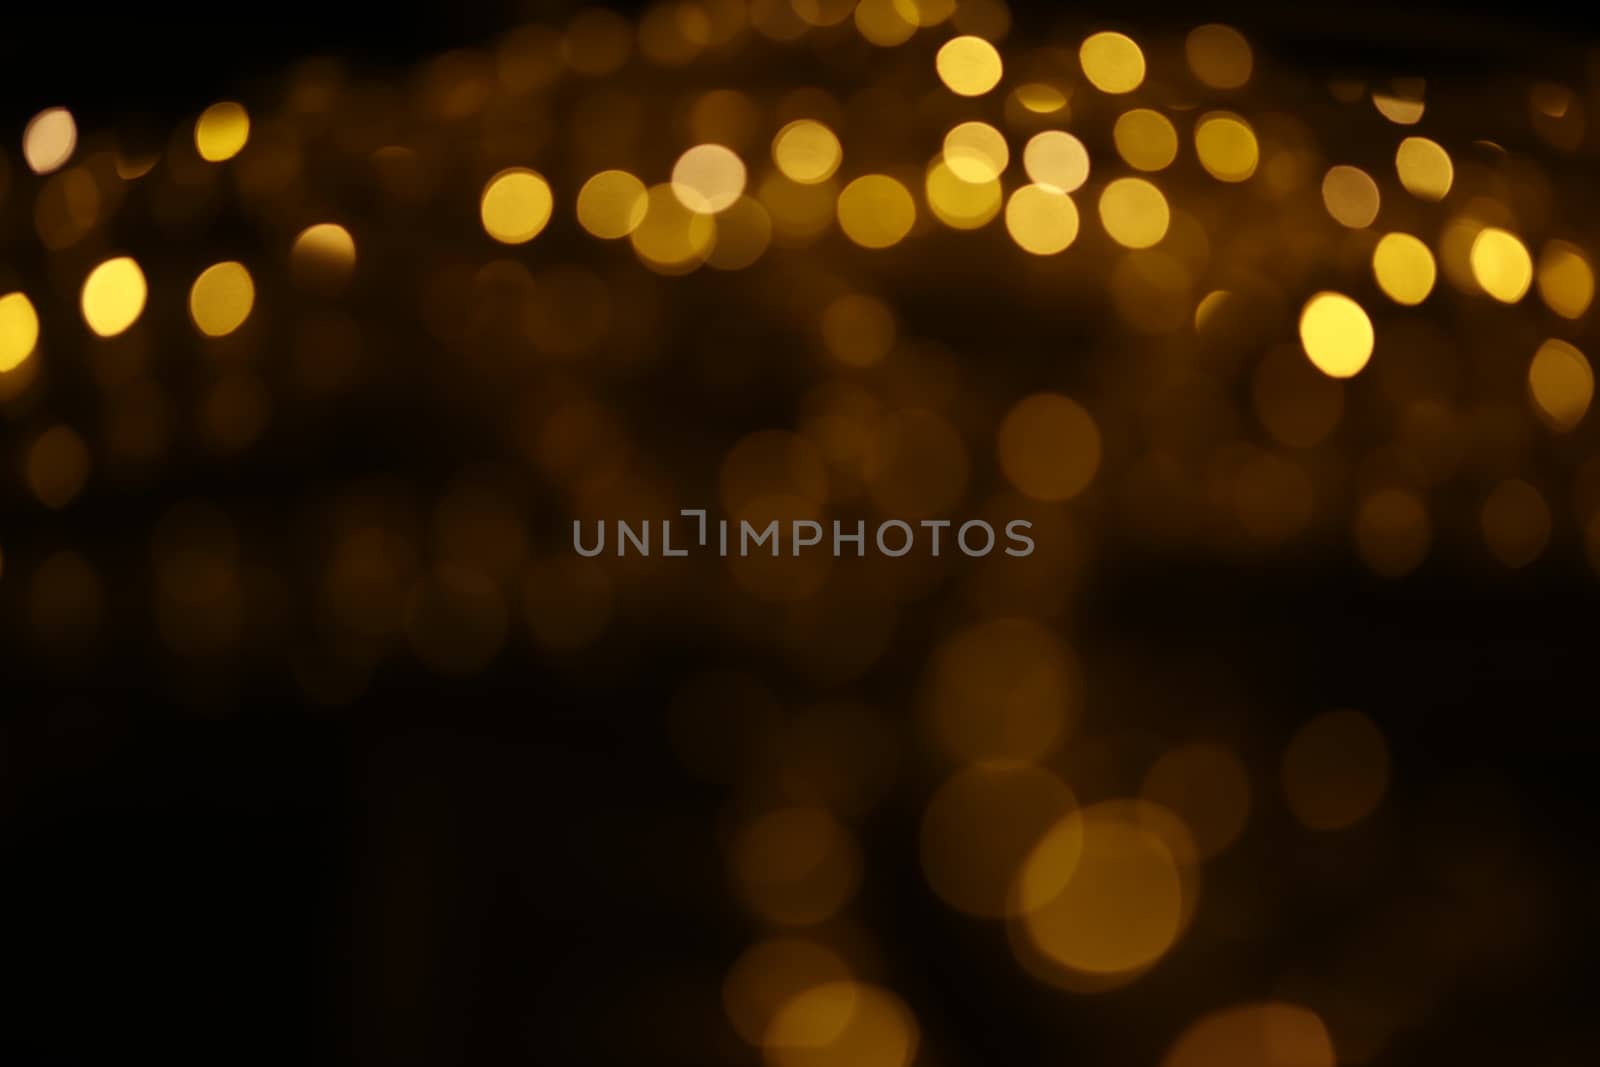 Abstract Blur lights background by rajastills